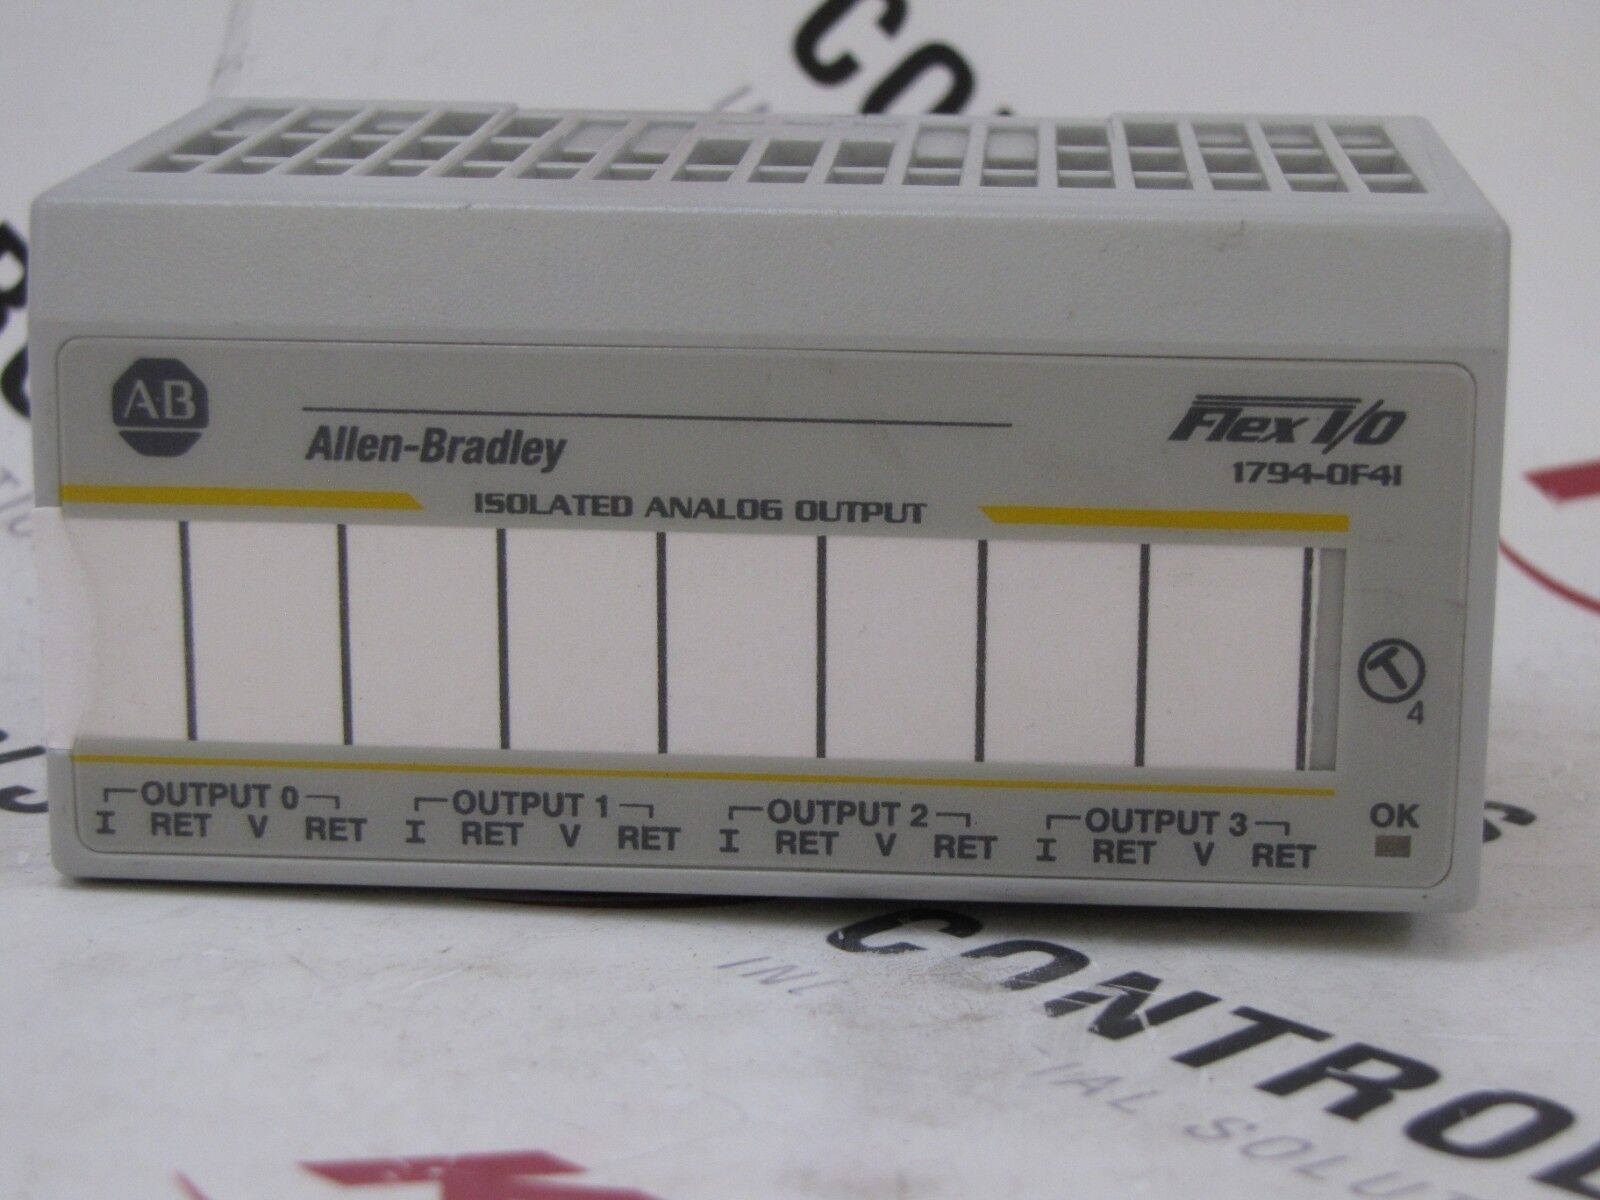 Allen-Bradley 1794-OF4I Flex I/O Isolated Analog Output Module